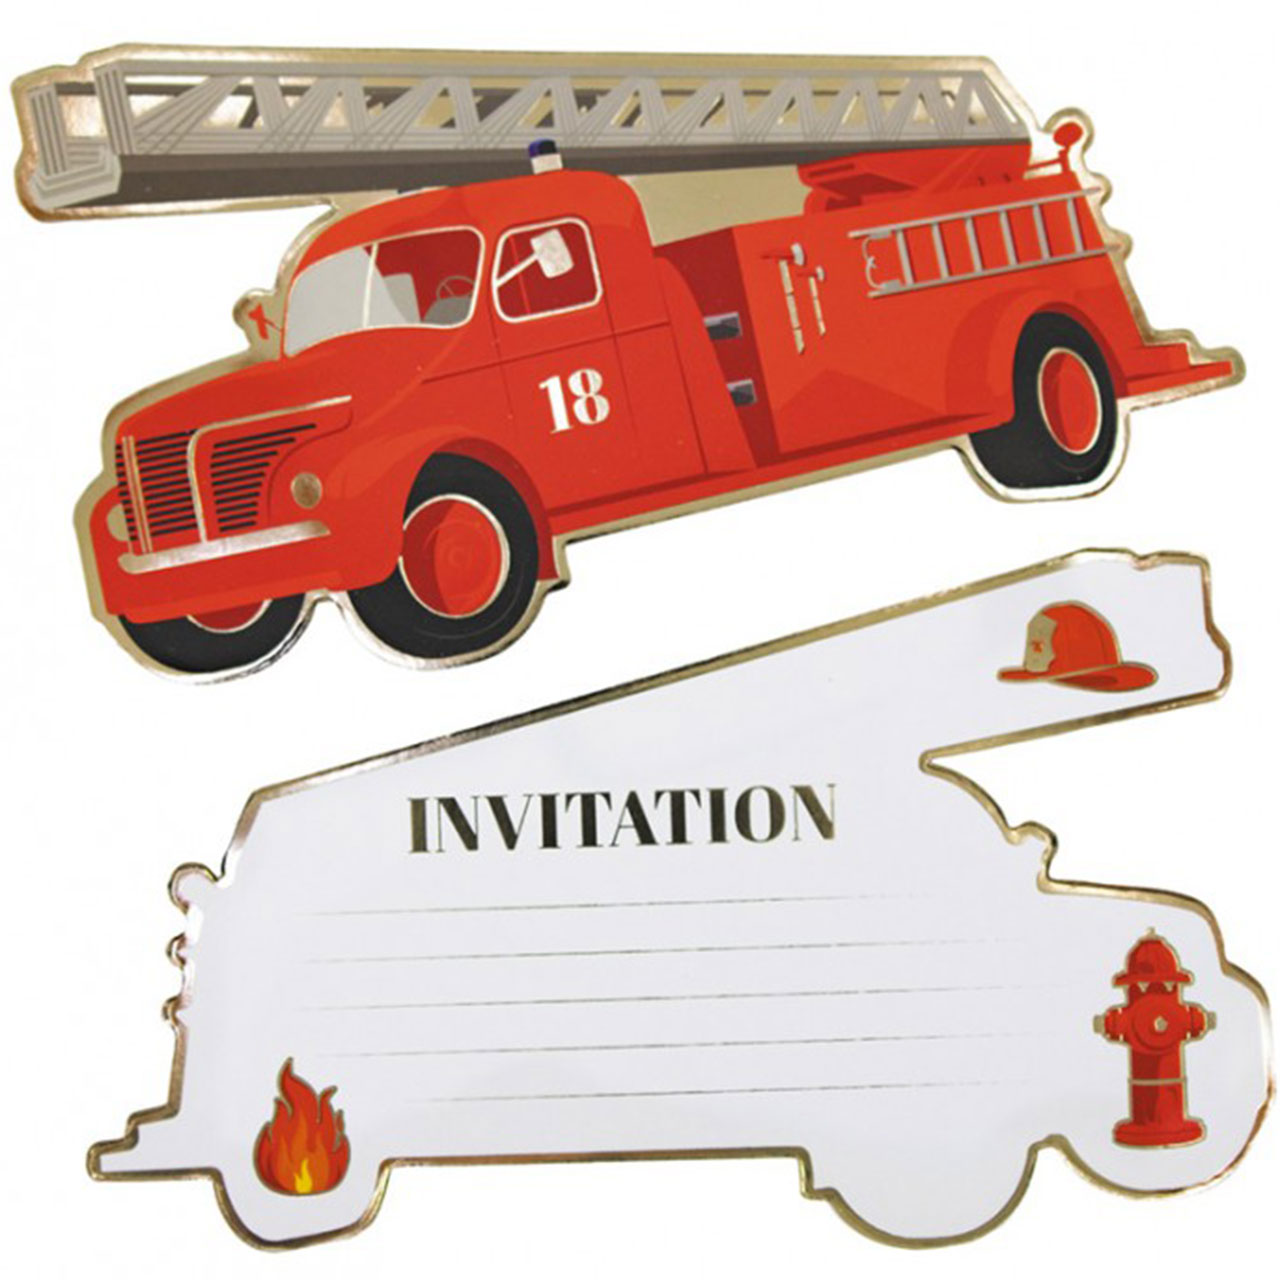 Invitation - Fire Engine  